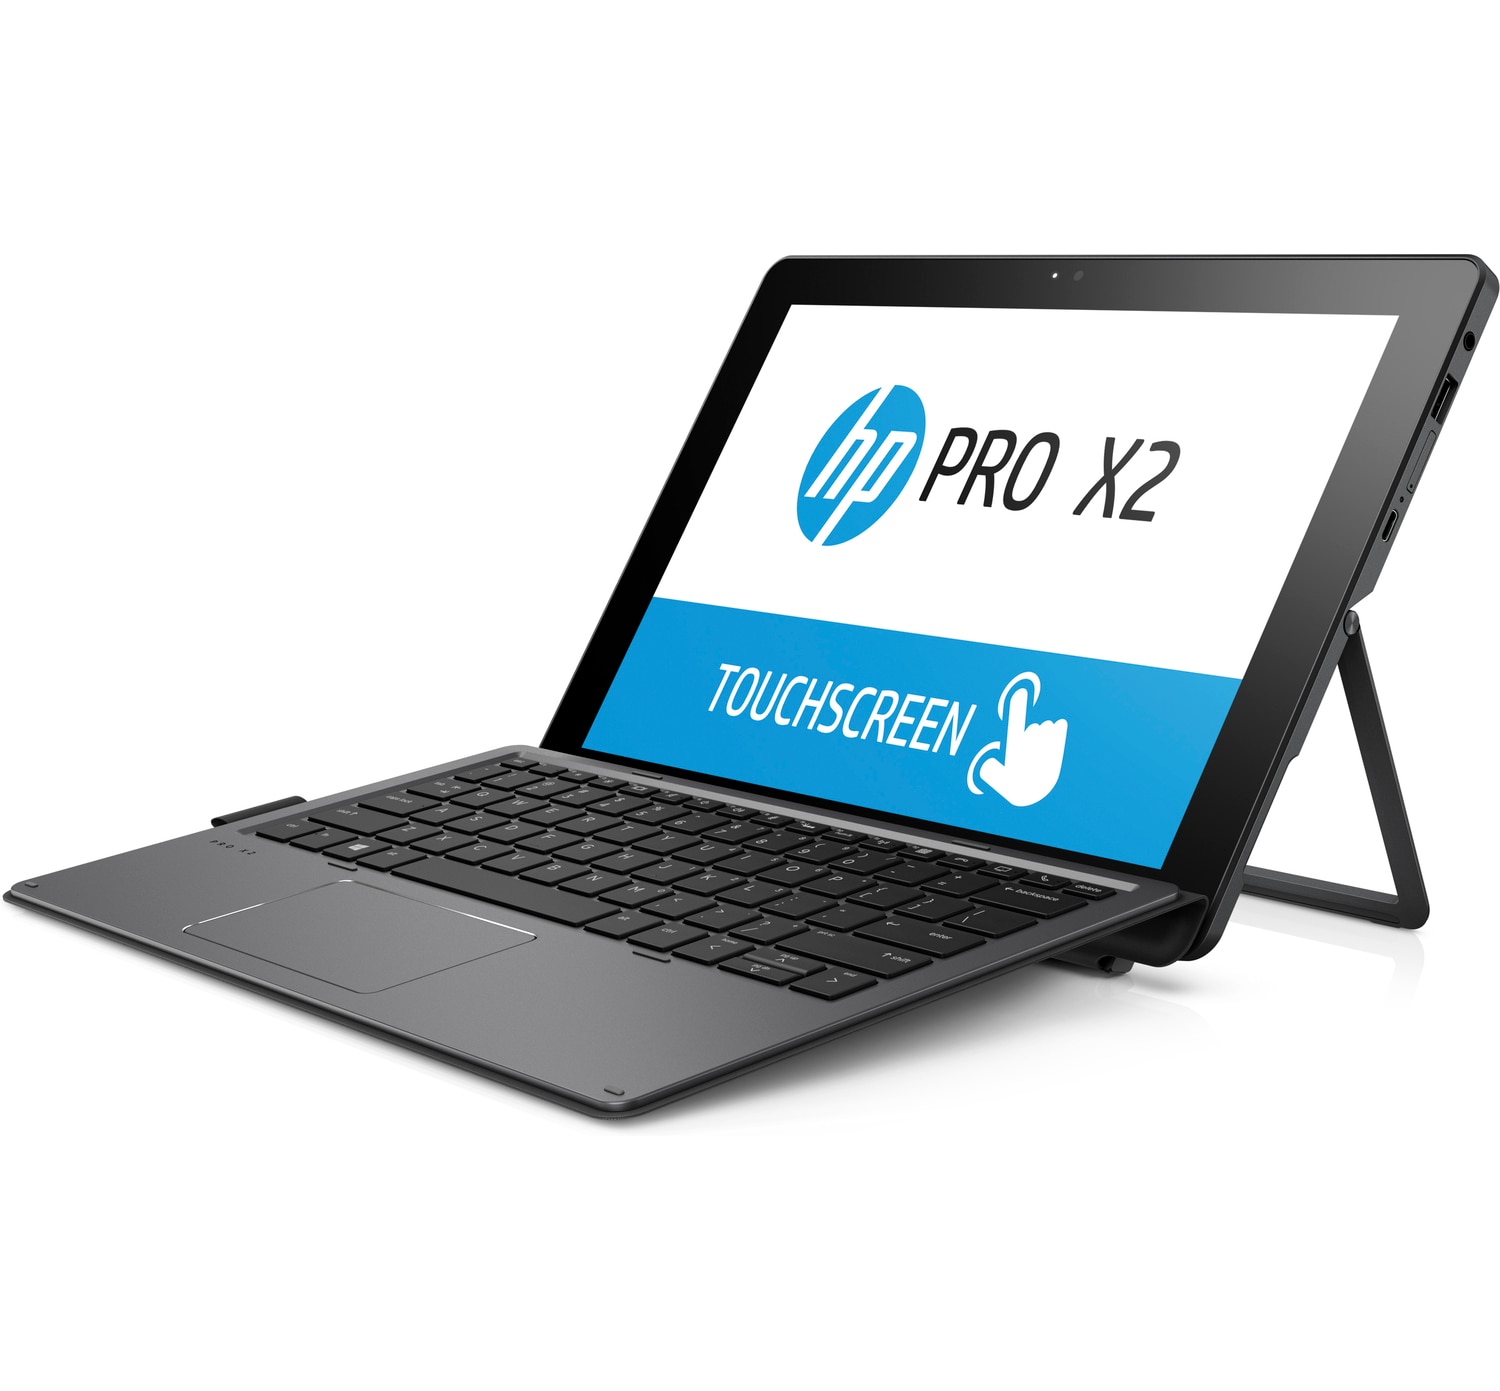 Hp Pro X2 612 G2 Tablet Base Mode 12 I5 7y54 1 2 Ghz 4gb 128gb Ssd